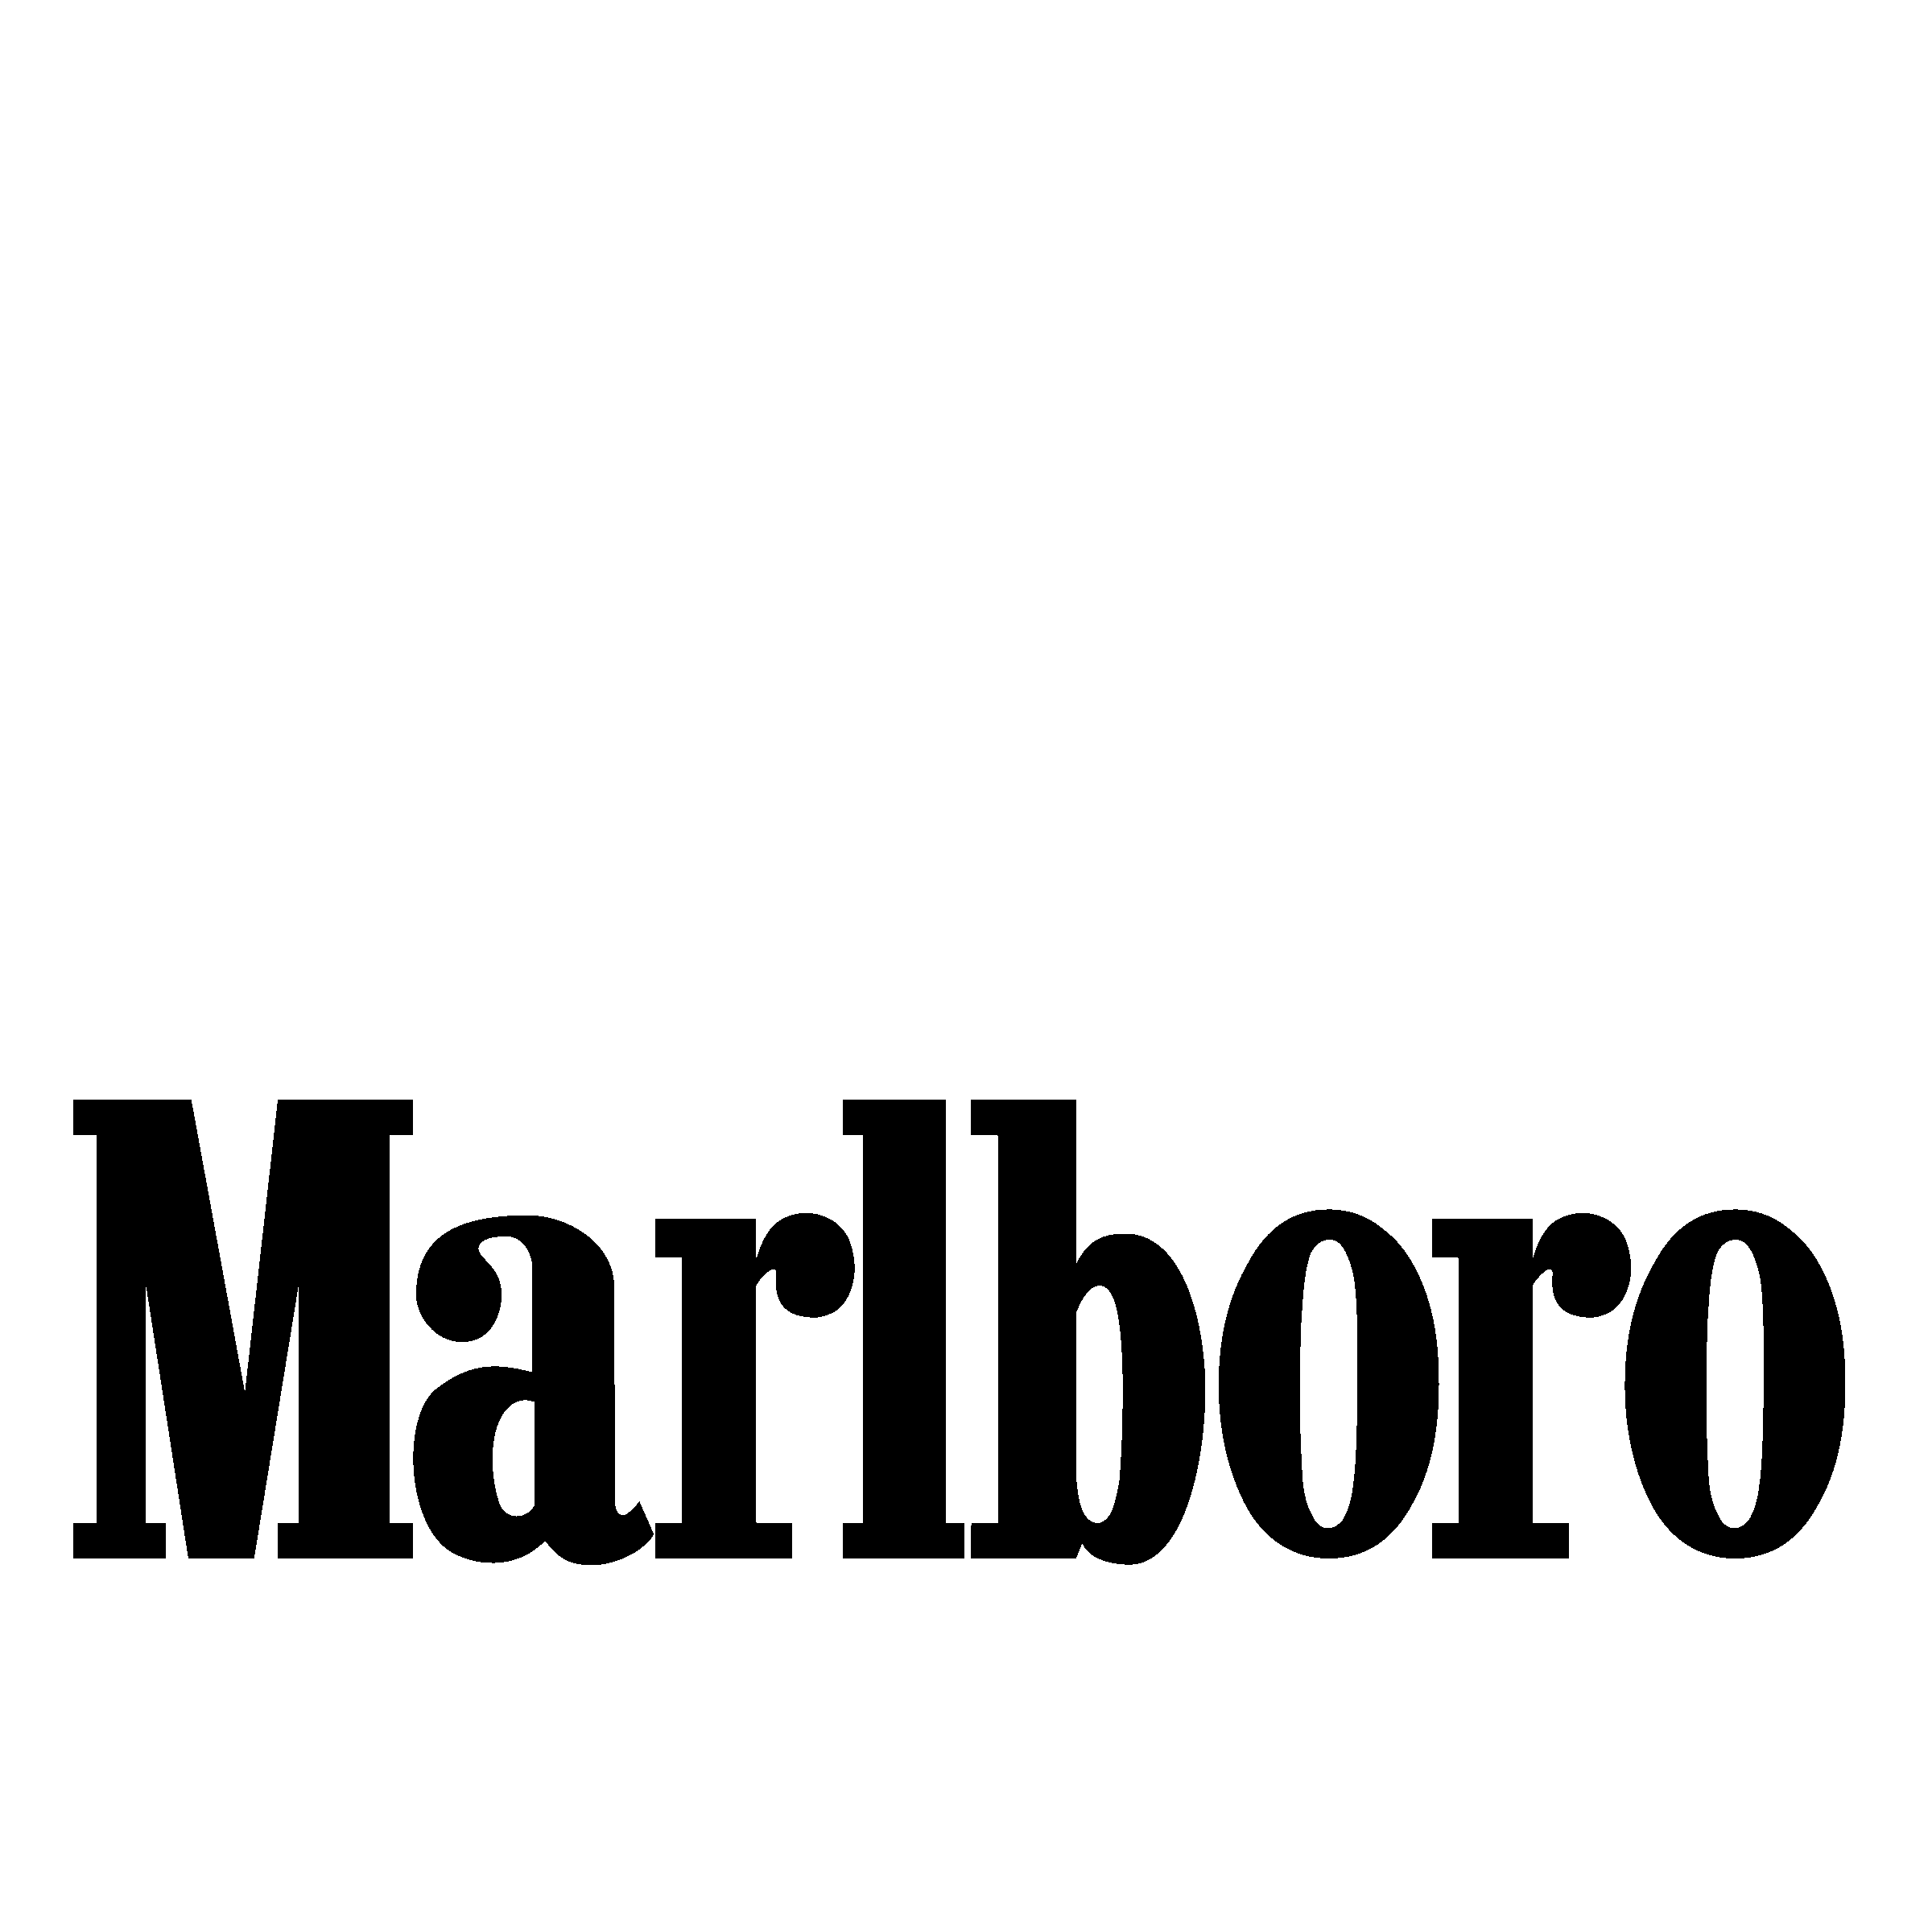 Maarlboro Logo - Marlboro Logo PNG Transparent & SVG Vector